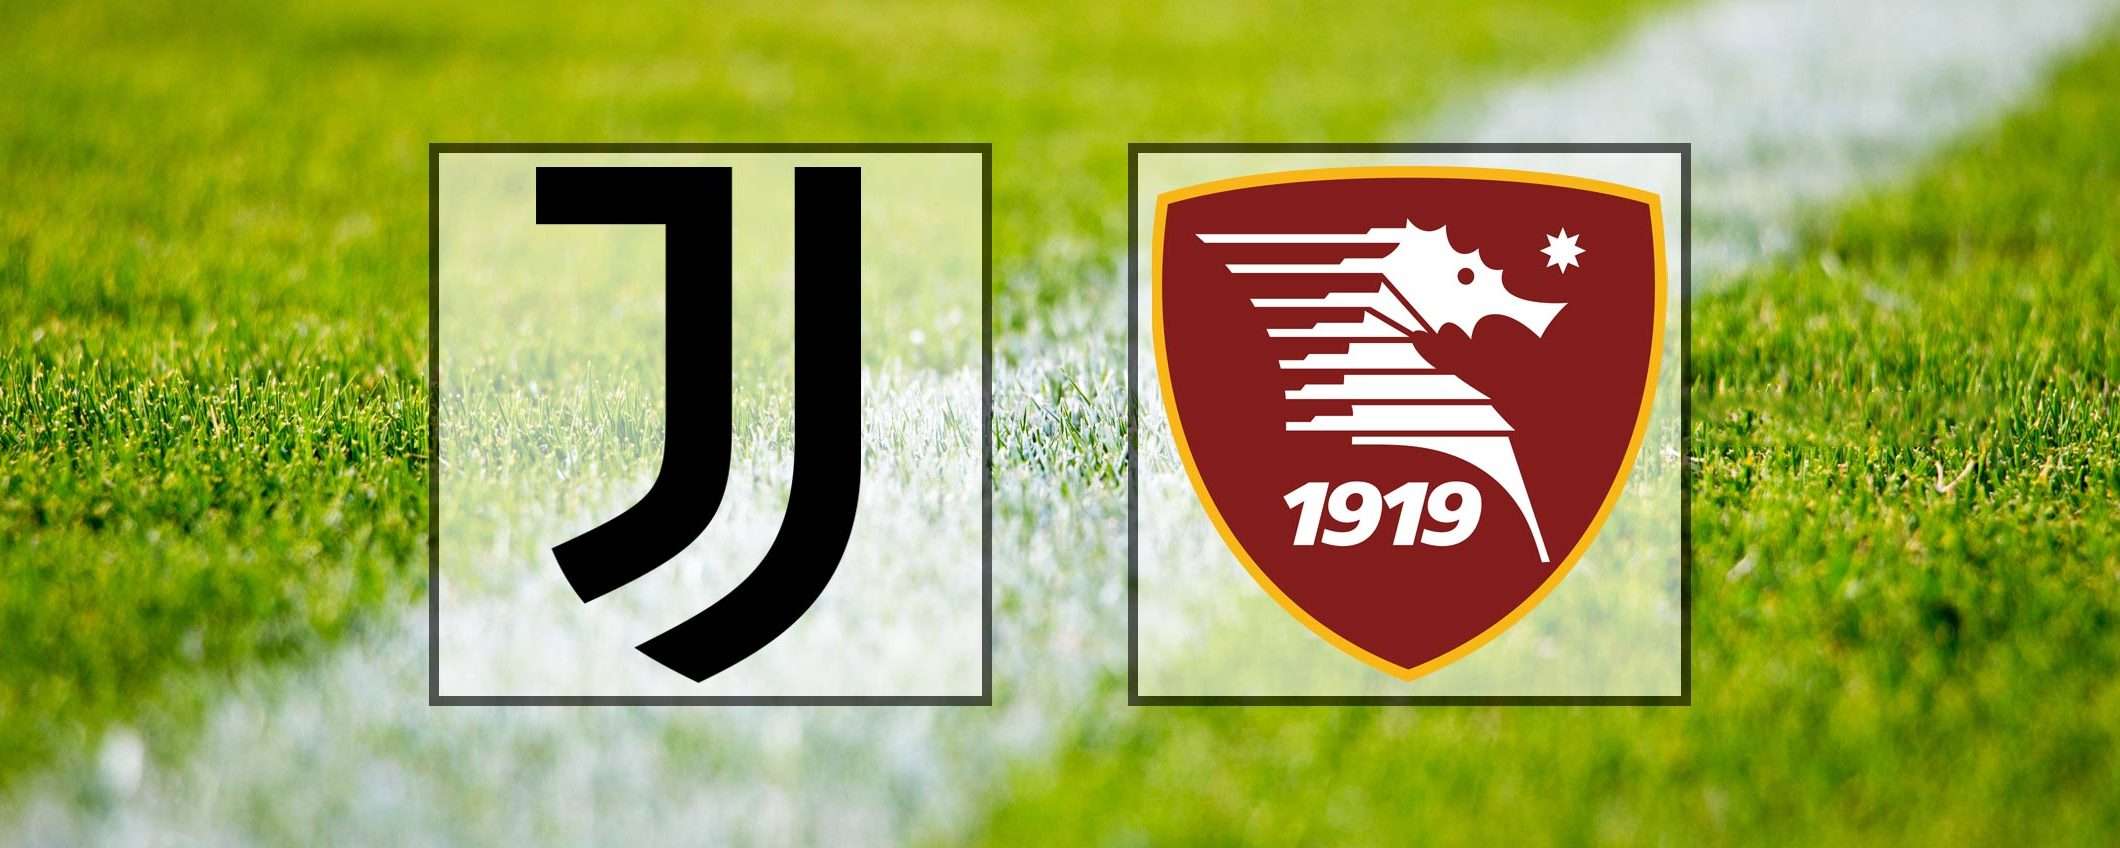 Juventus-Salernitana (Serie A): guardala in streaming